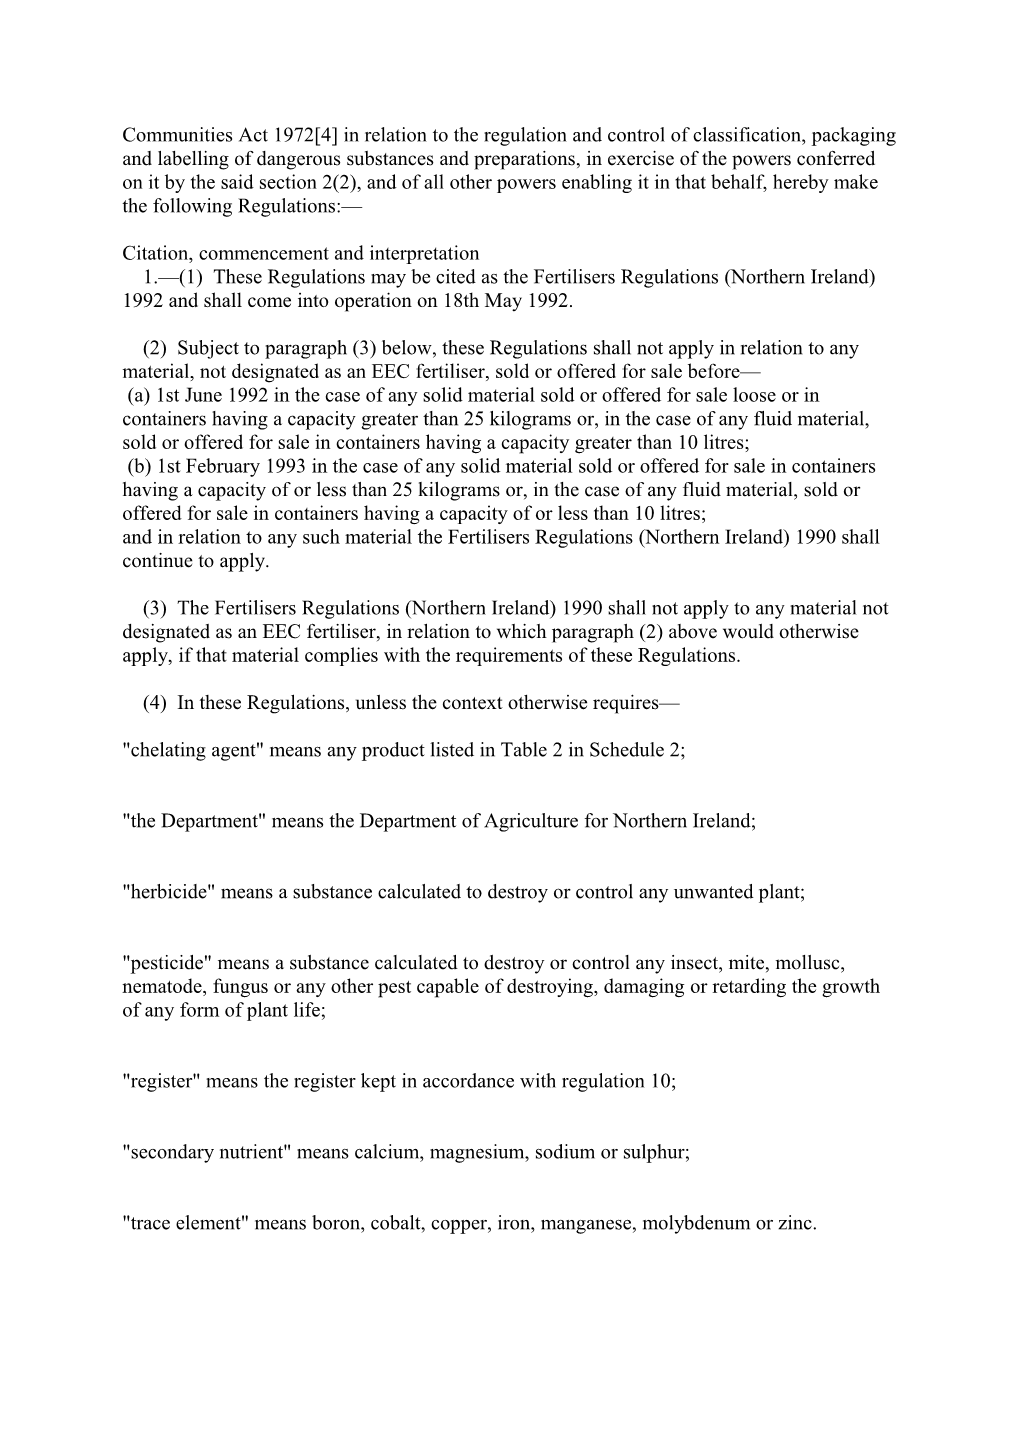 The Fertilisers Regulations (Northern Ireland) 1992